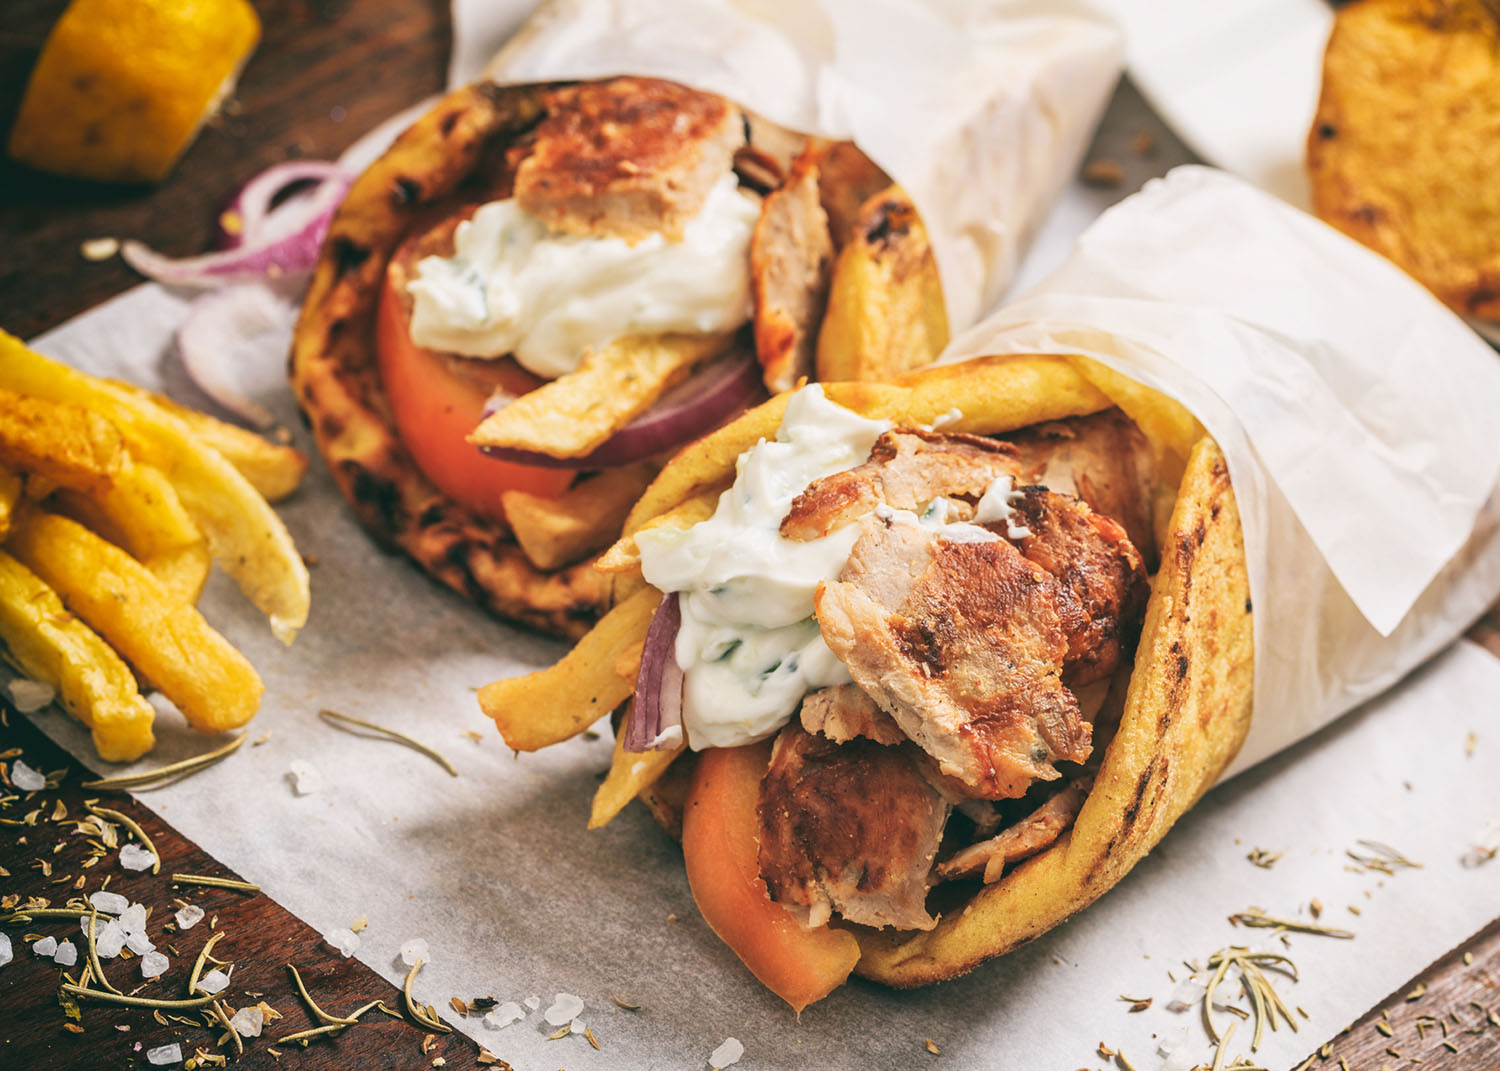 Greek gyros wraped in a pita bread on a wooden background